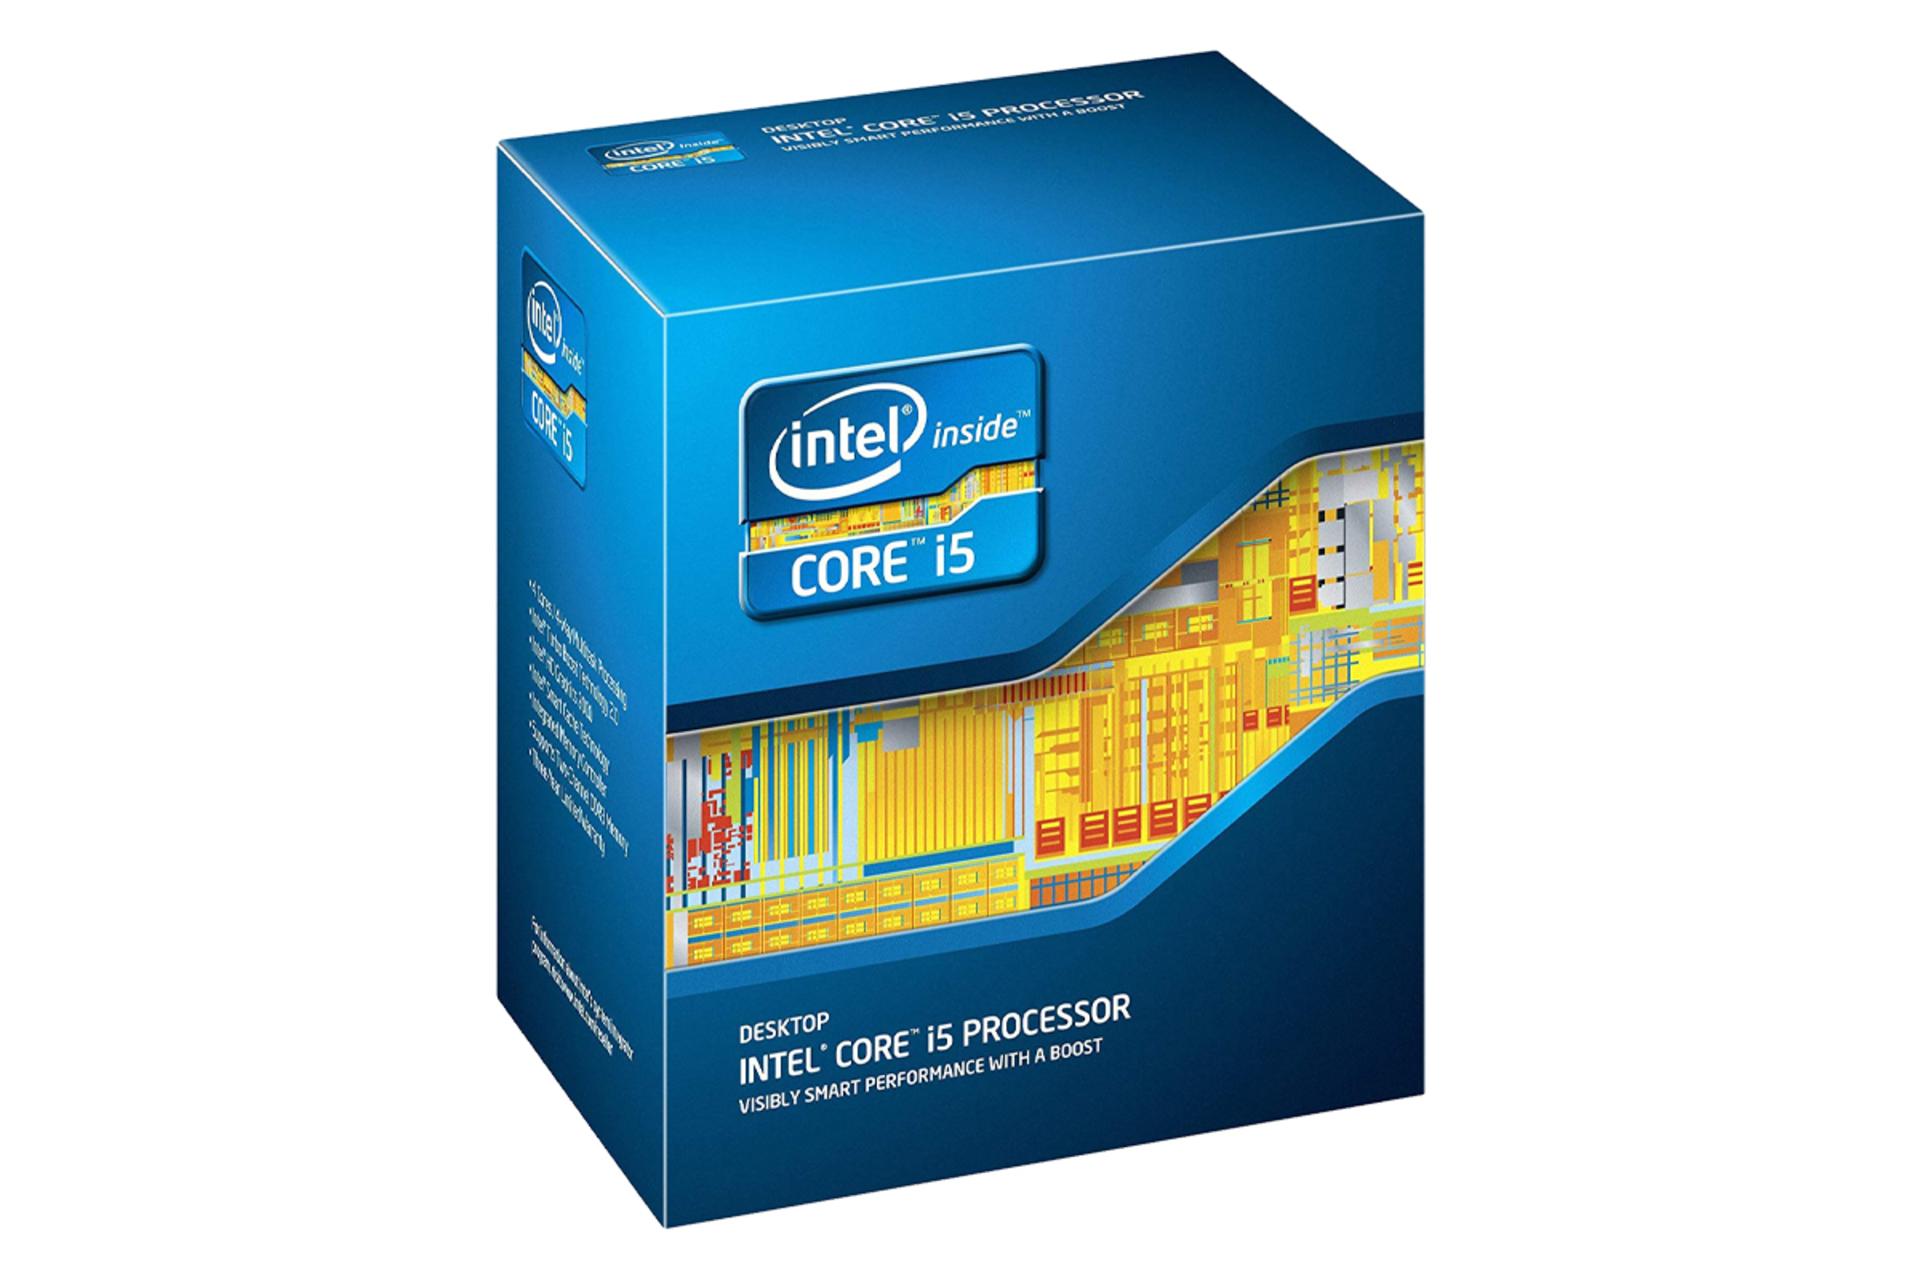 اینتل Core i5-2400 / Intel Core i5-2400